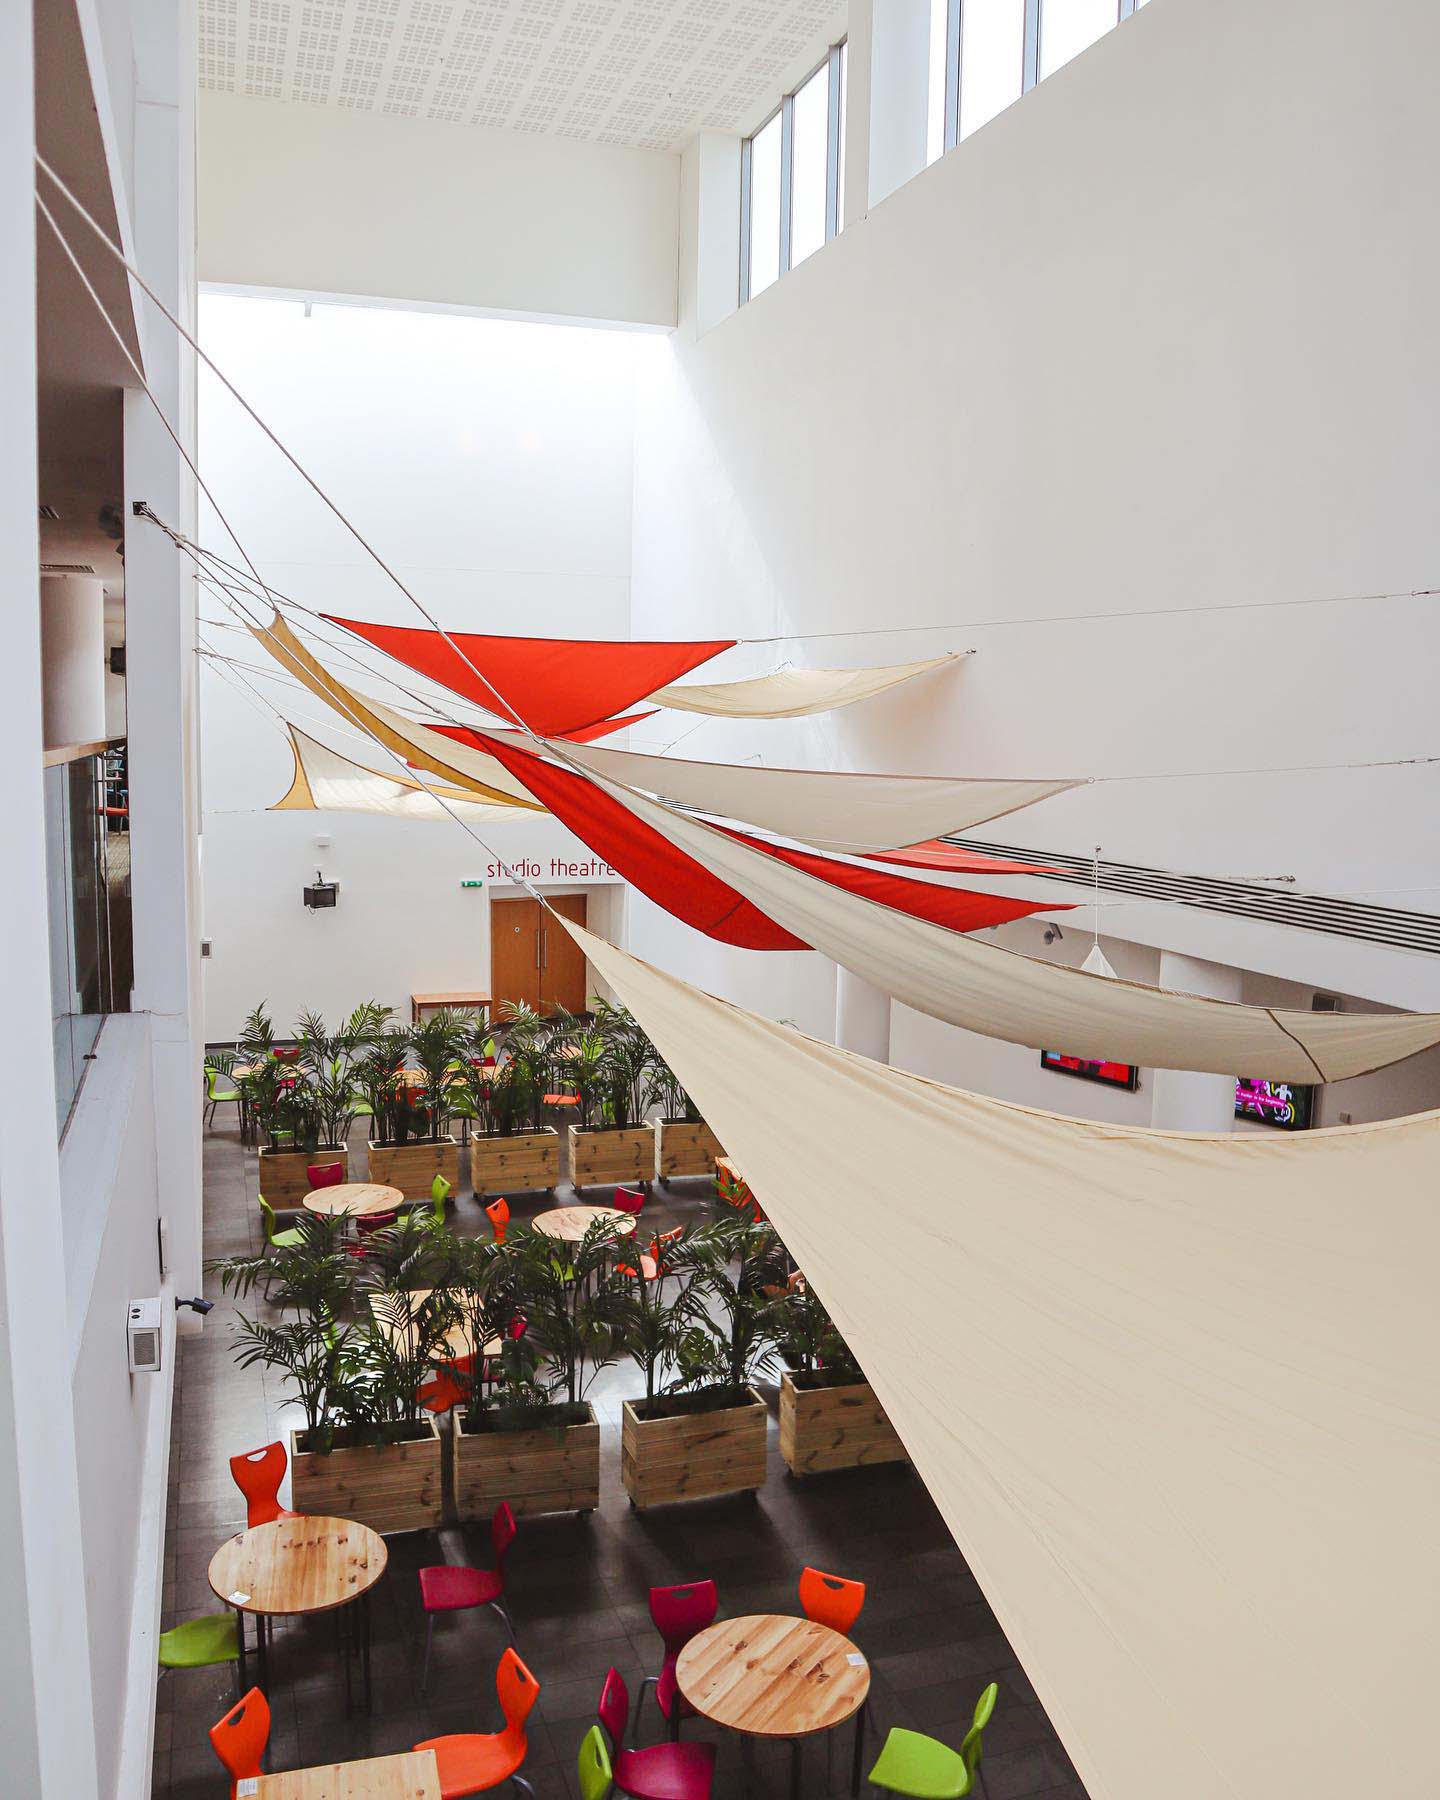 Fabric sails hanging above artsdepot Cafe